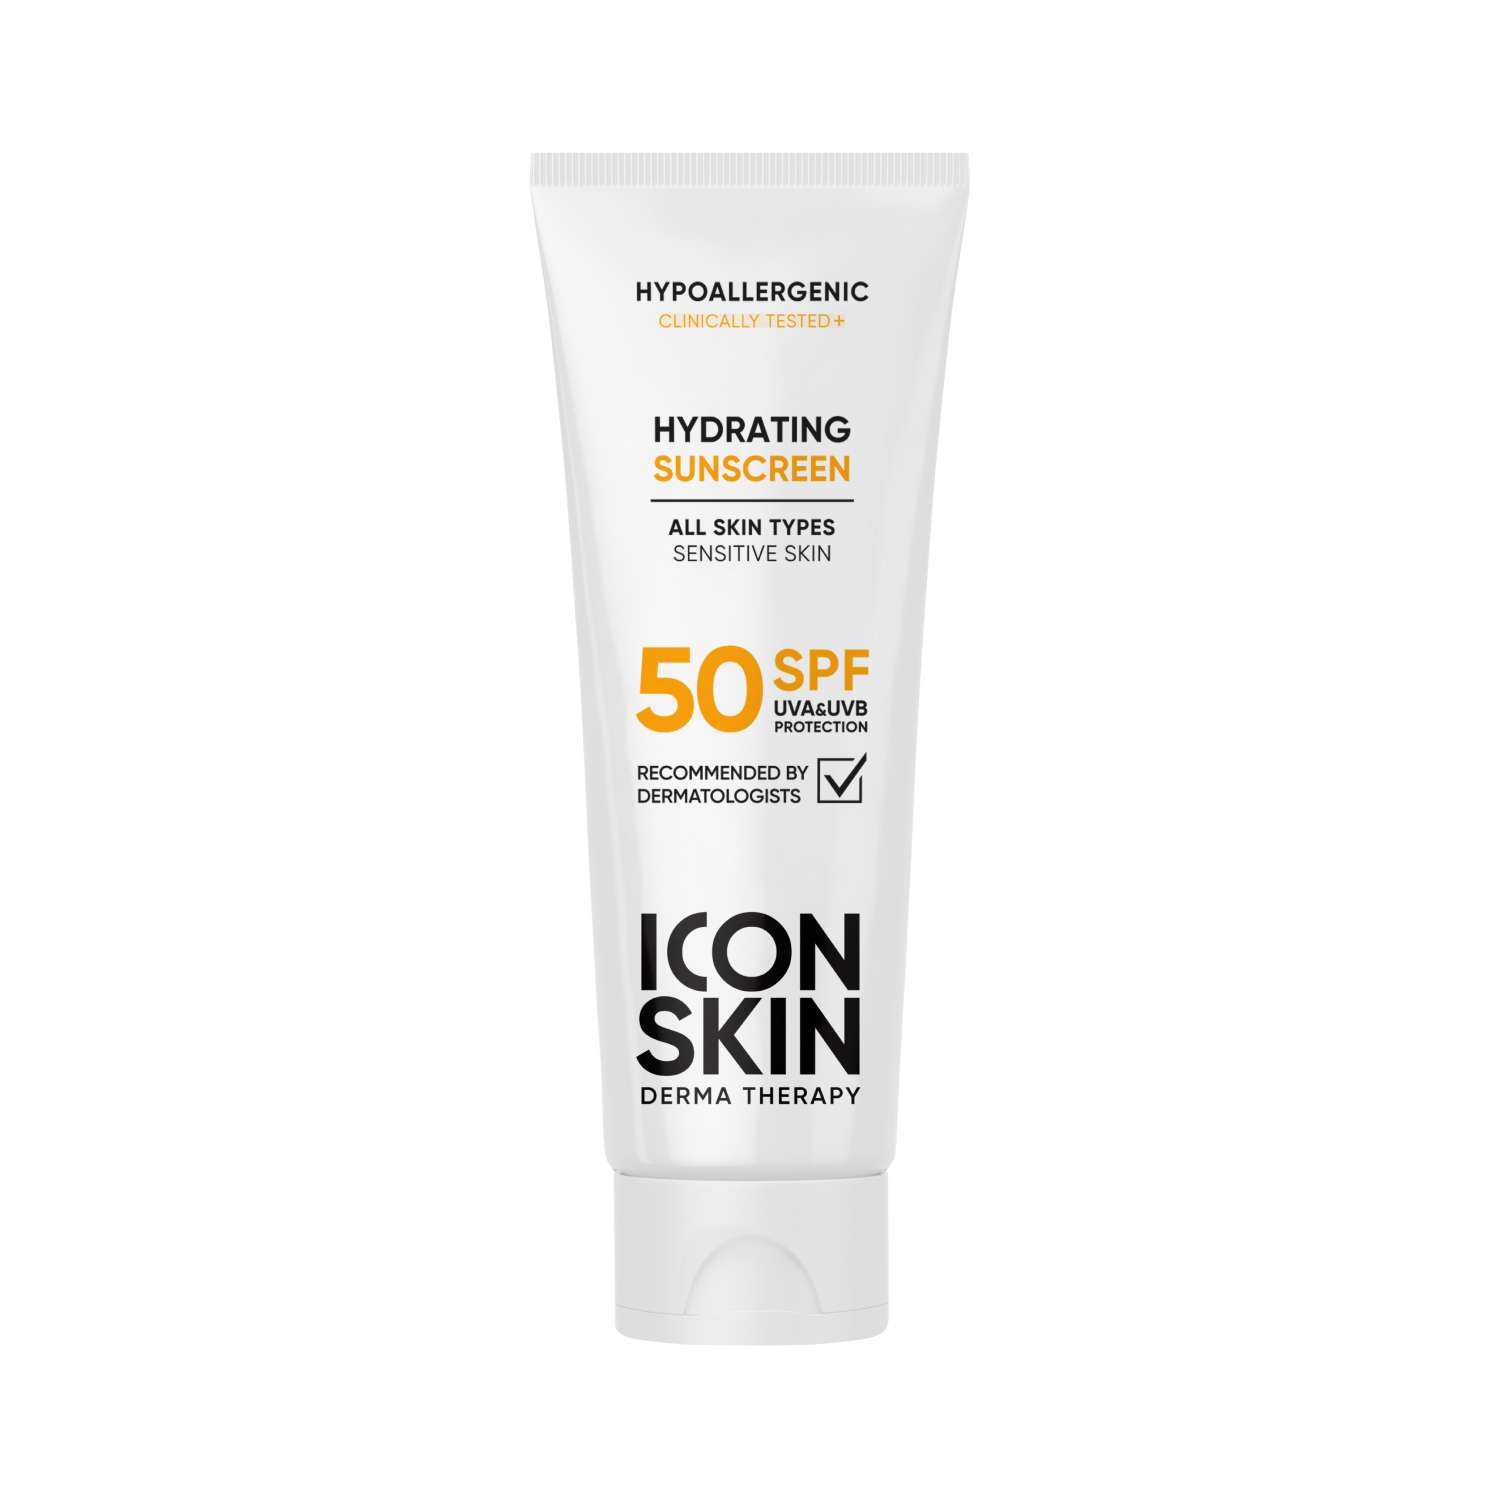 Солнцезащитный крем для лица ICON SKIN SPF 50 увлажняющий для всех типов кожи 75 мл - фото 1